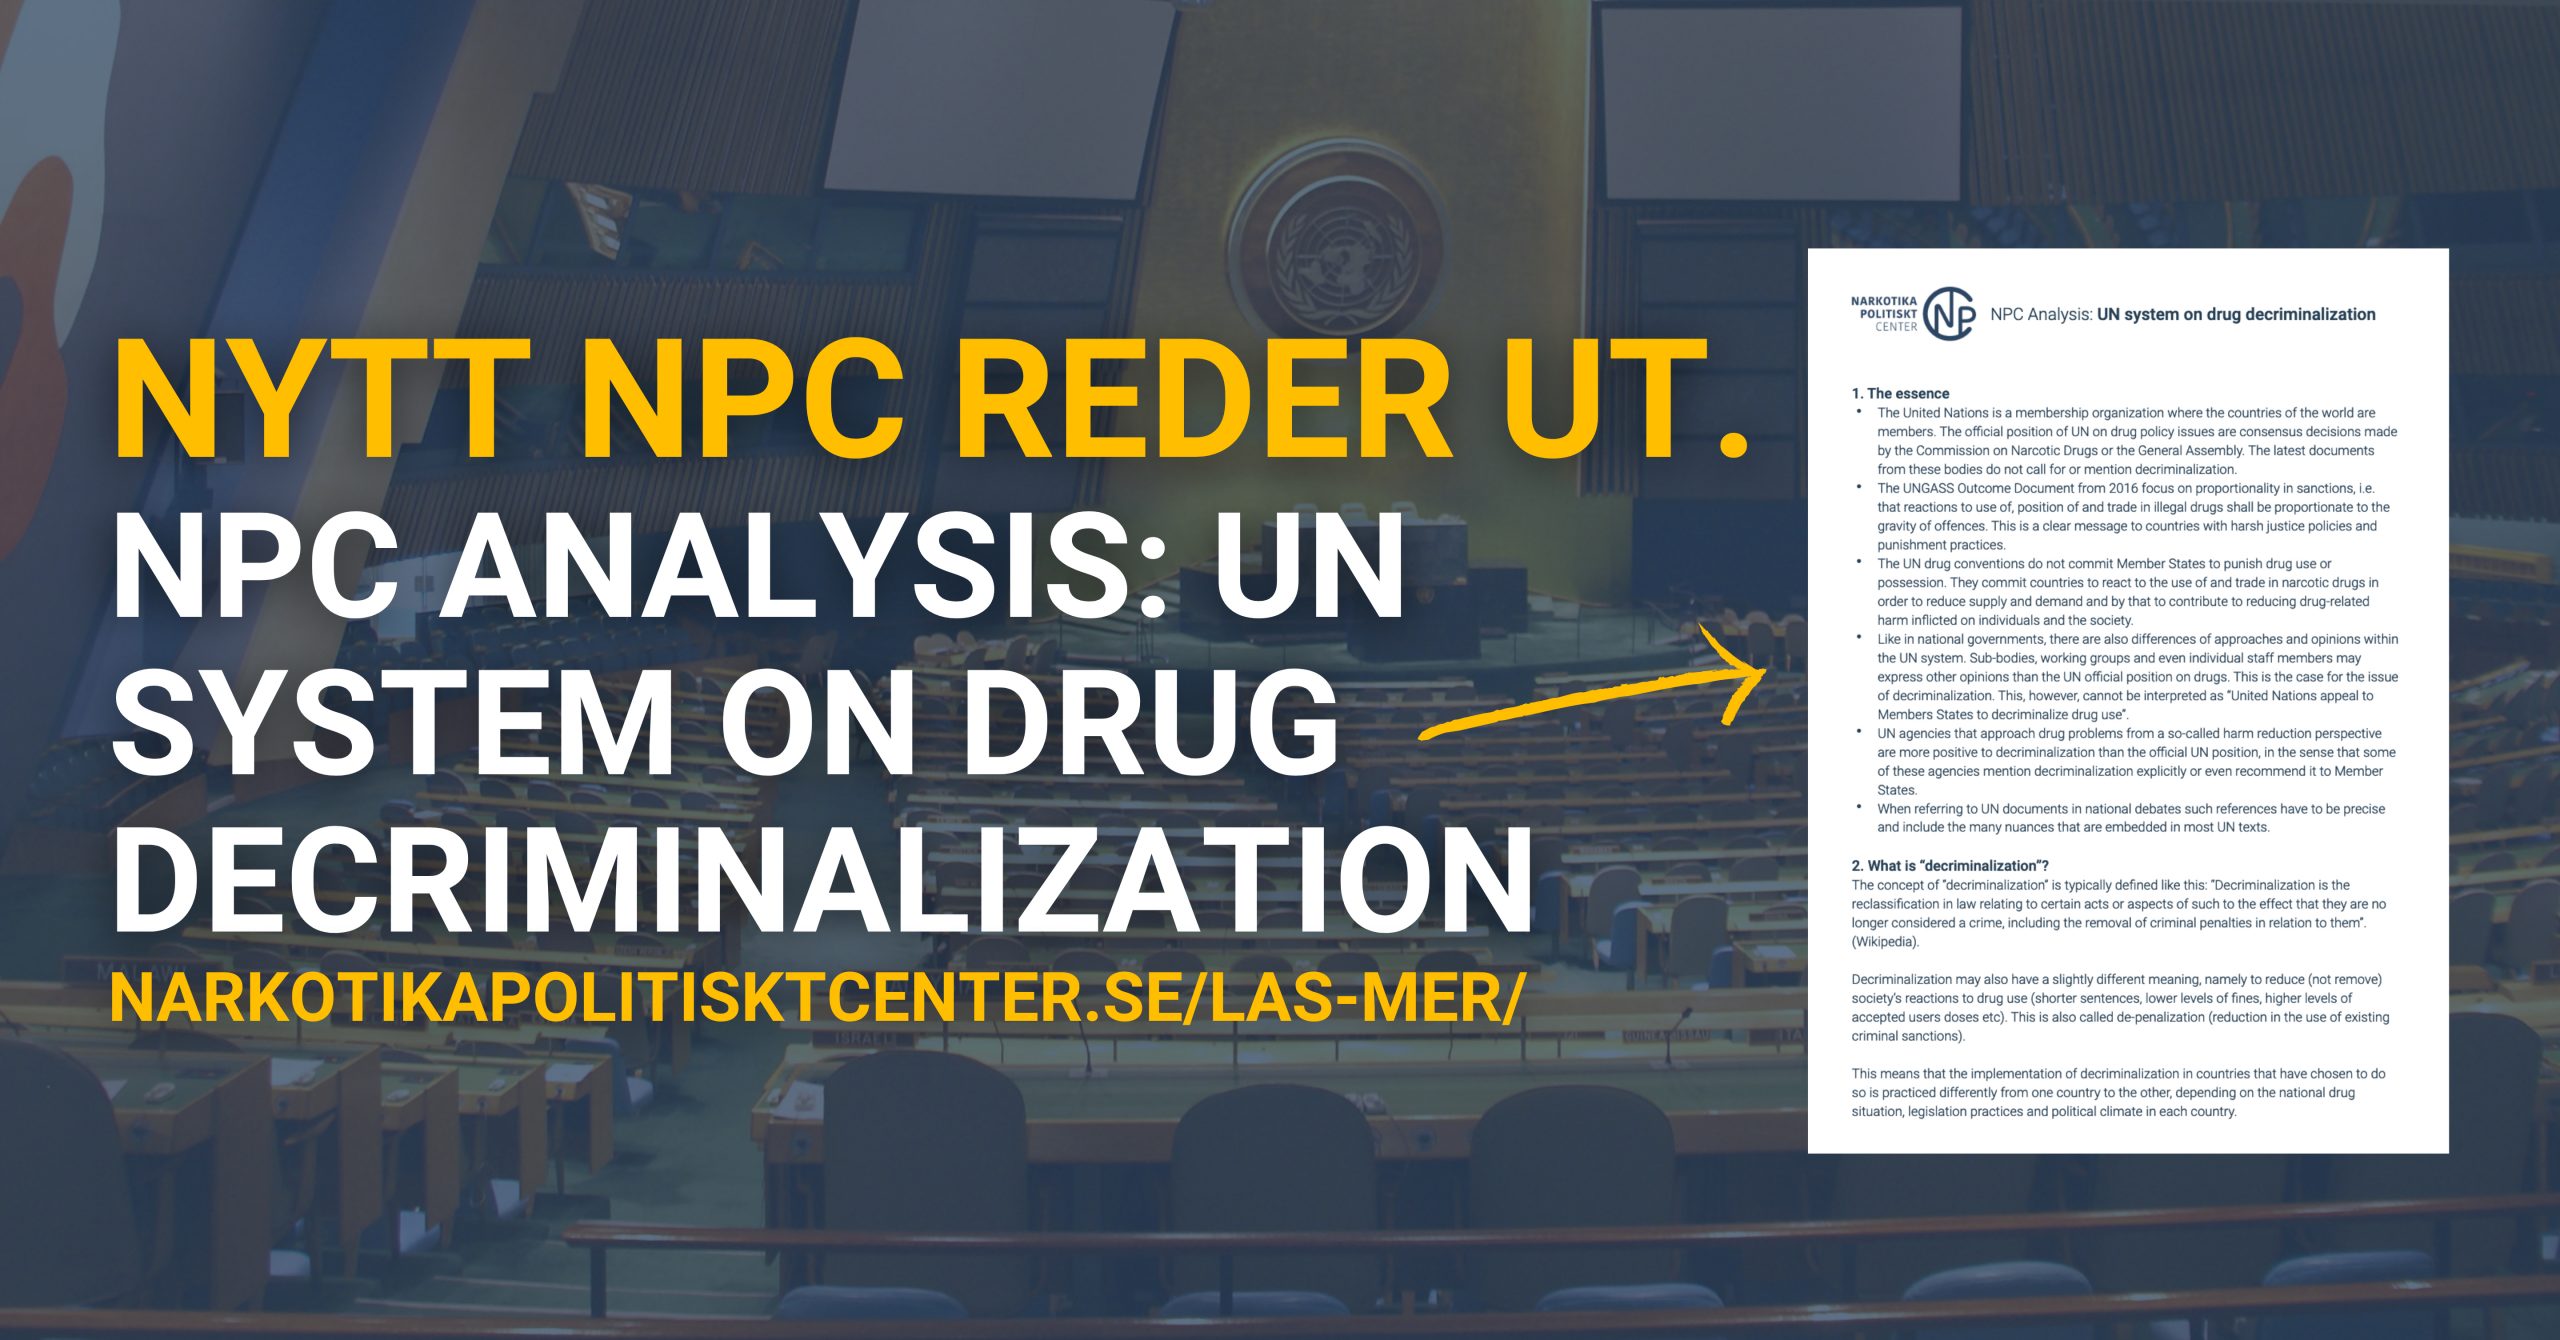 NPC reder ut: UN system on drug decriminalization